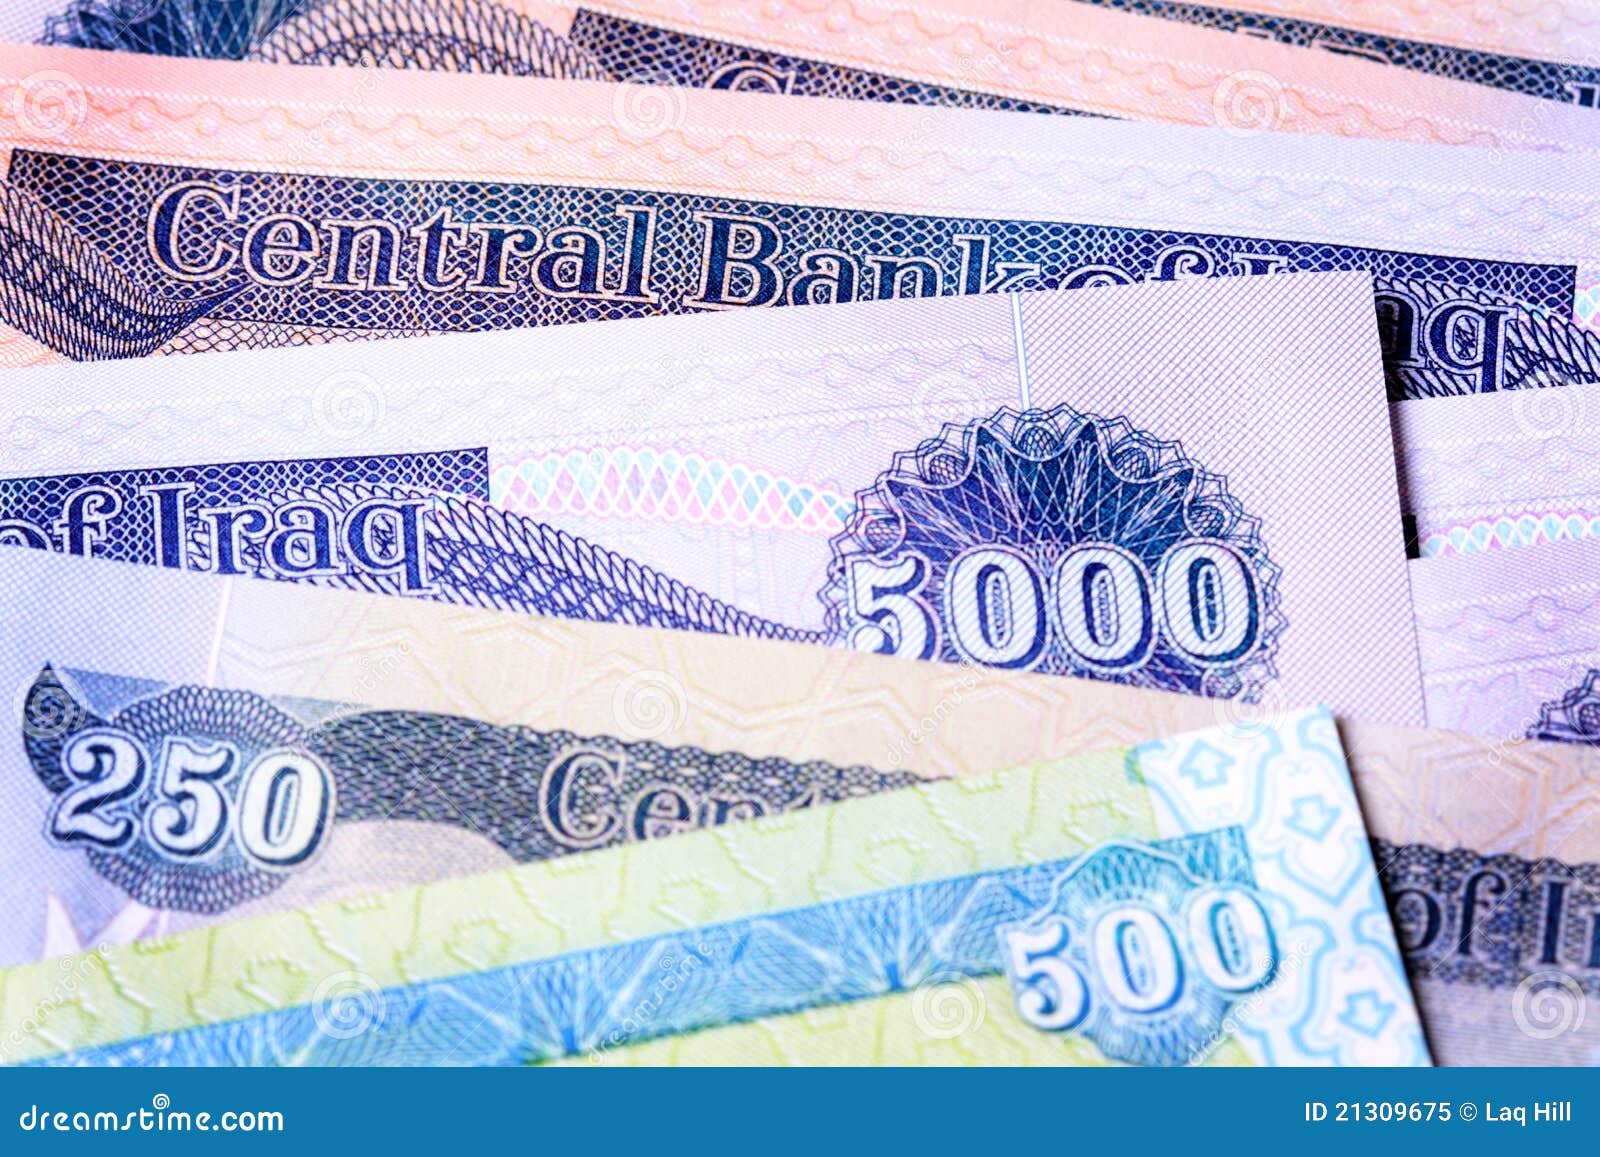 various new iraq dinar